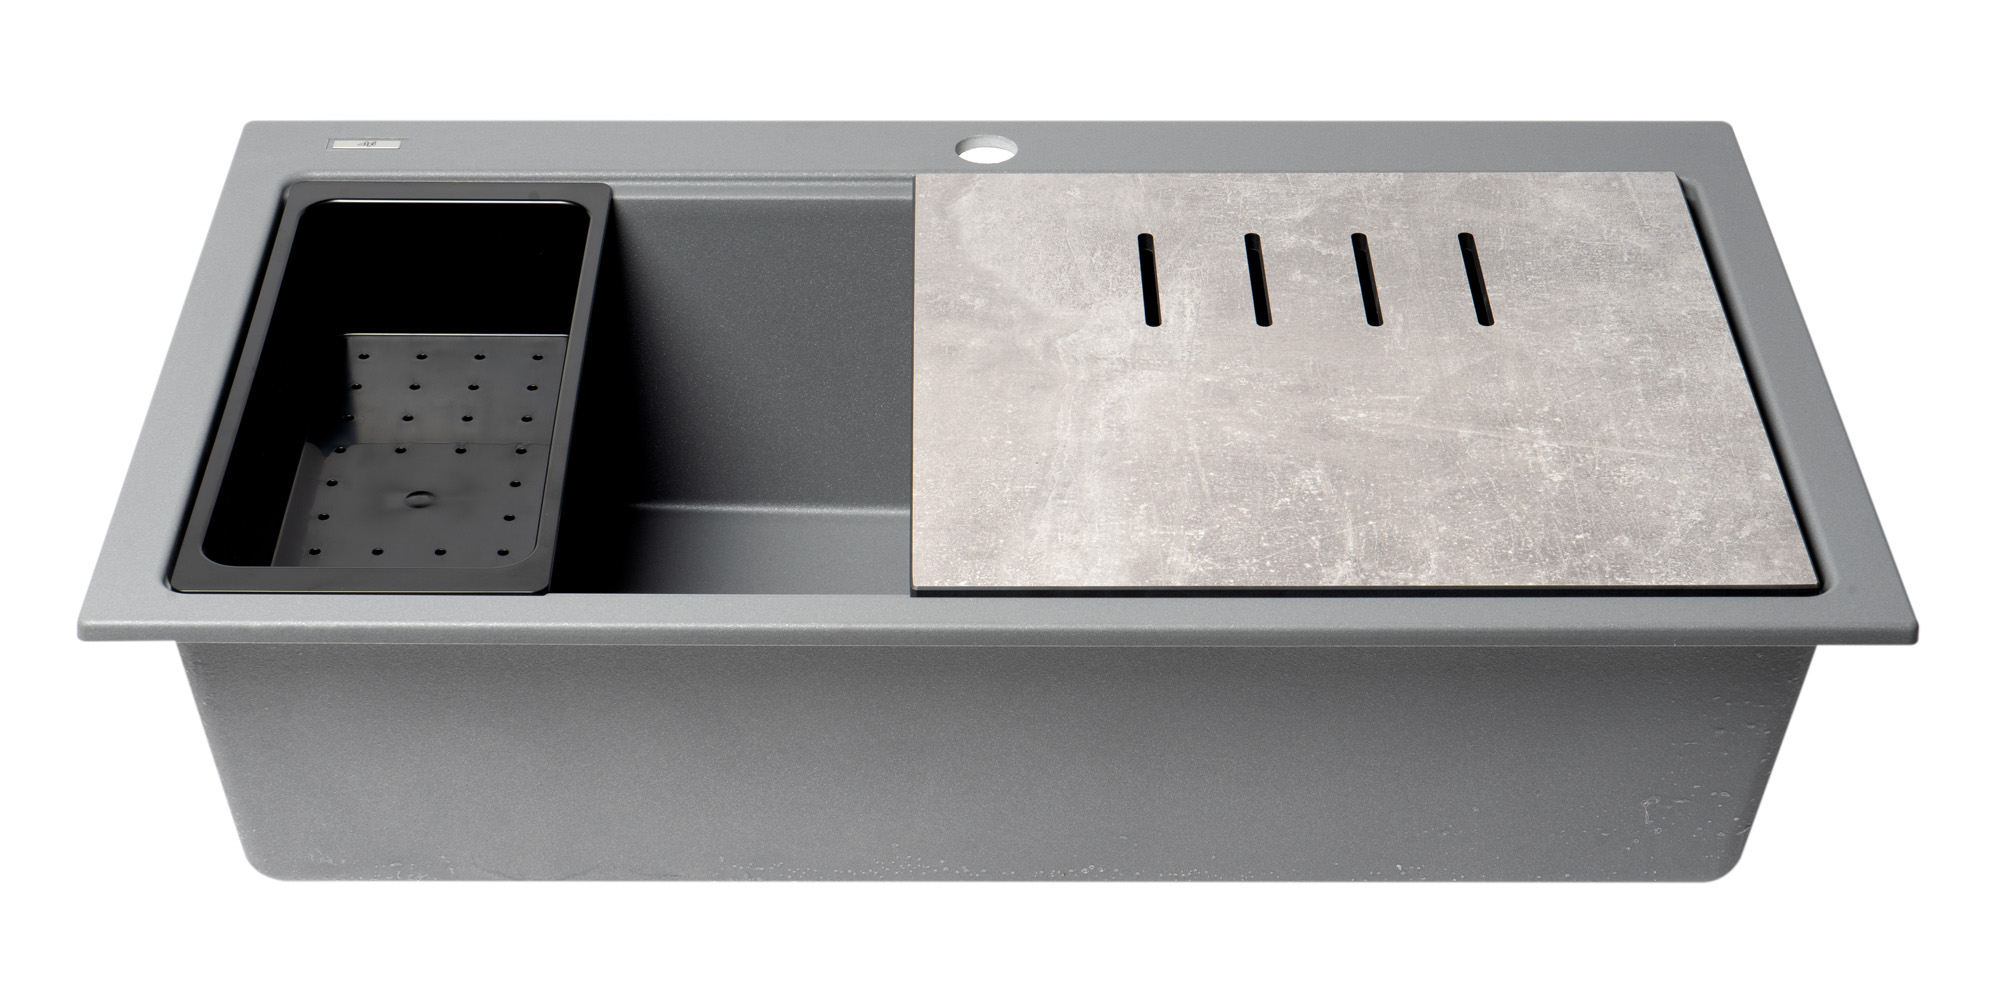 ALFI brand 34" Drop In Granite Composite Workstation Kitchen Sink with Accessories, Titanium, 1 Faucet Hole, AB3418SBDI-T